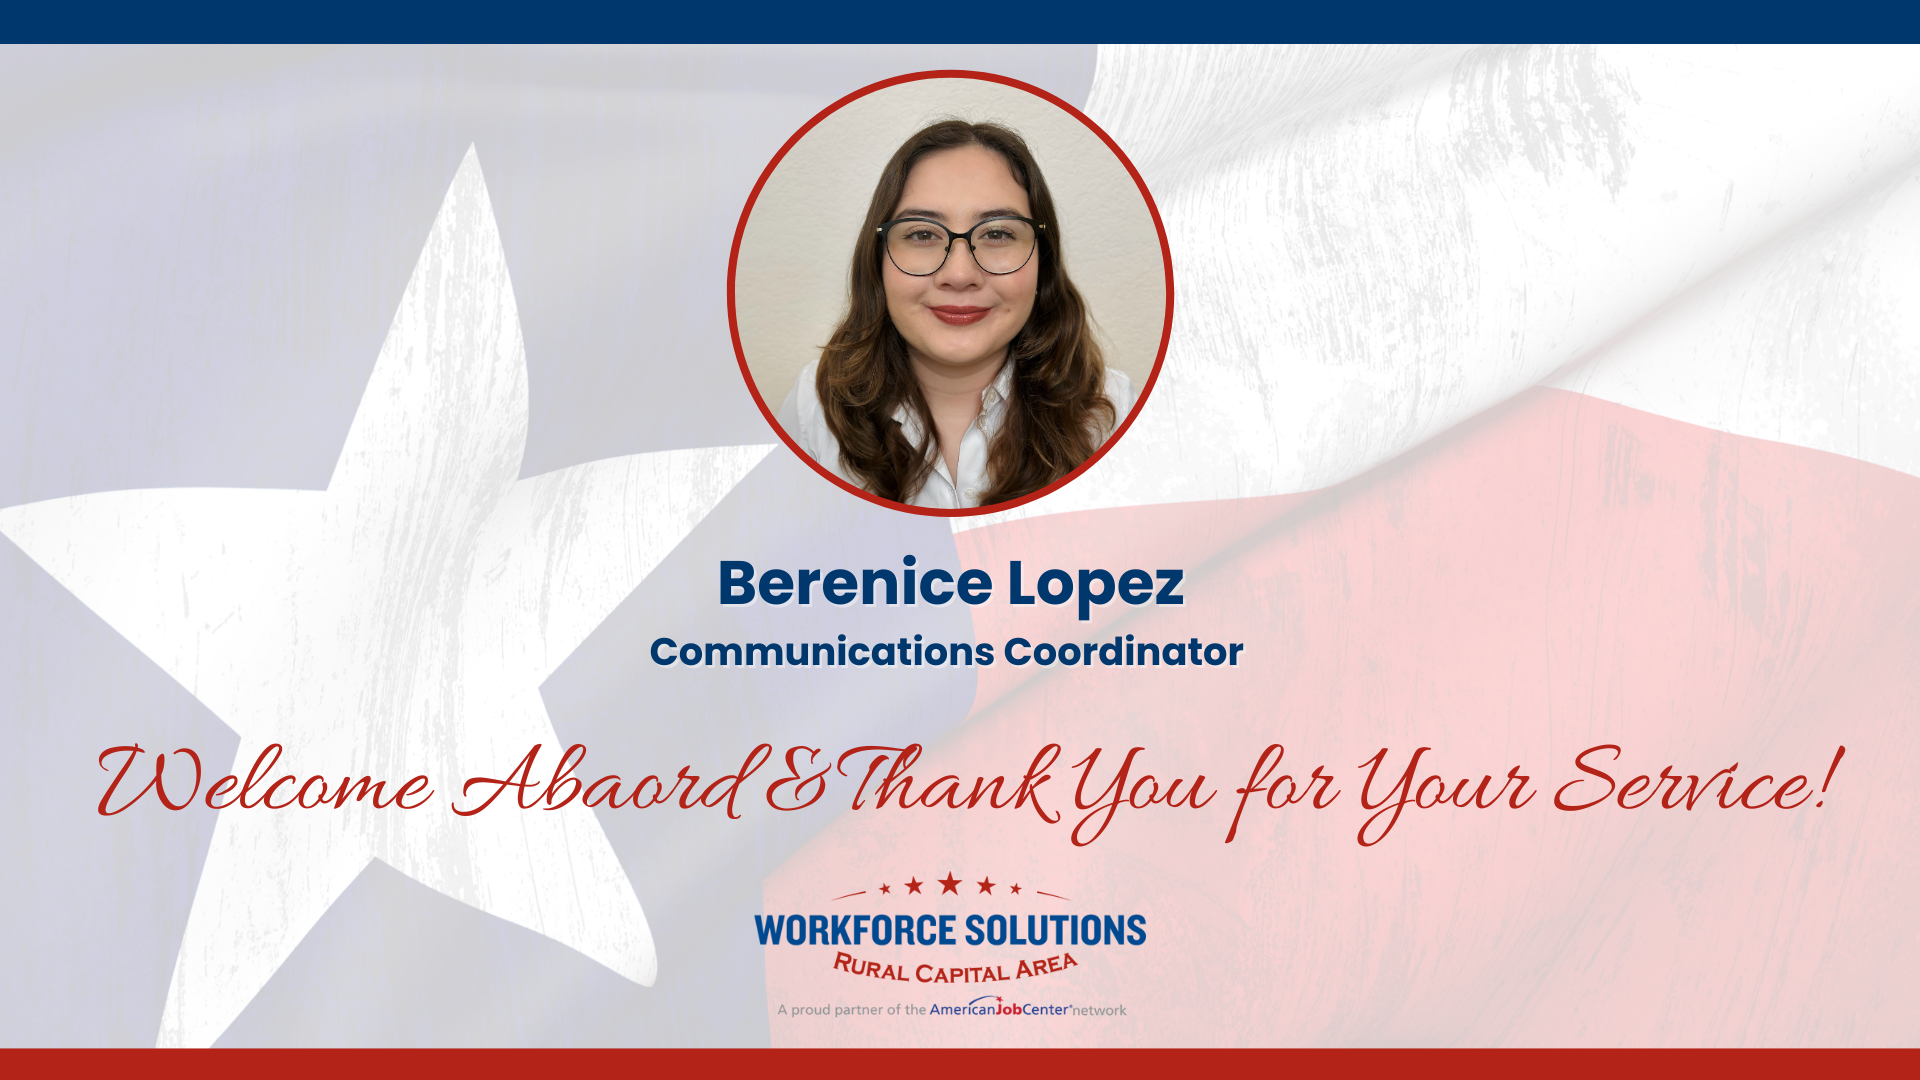 Workforce Solutions Rural Capital Area Announces Berenice Lopez as Communications Coordinator